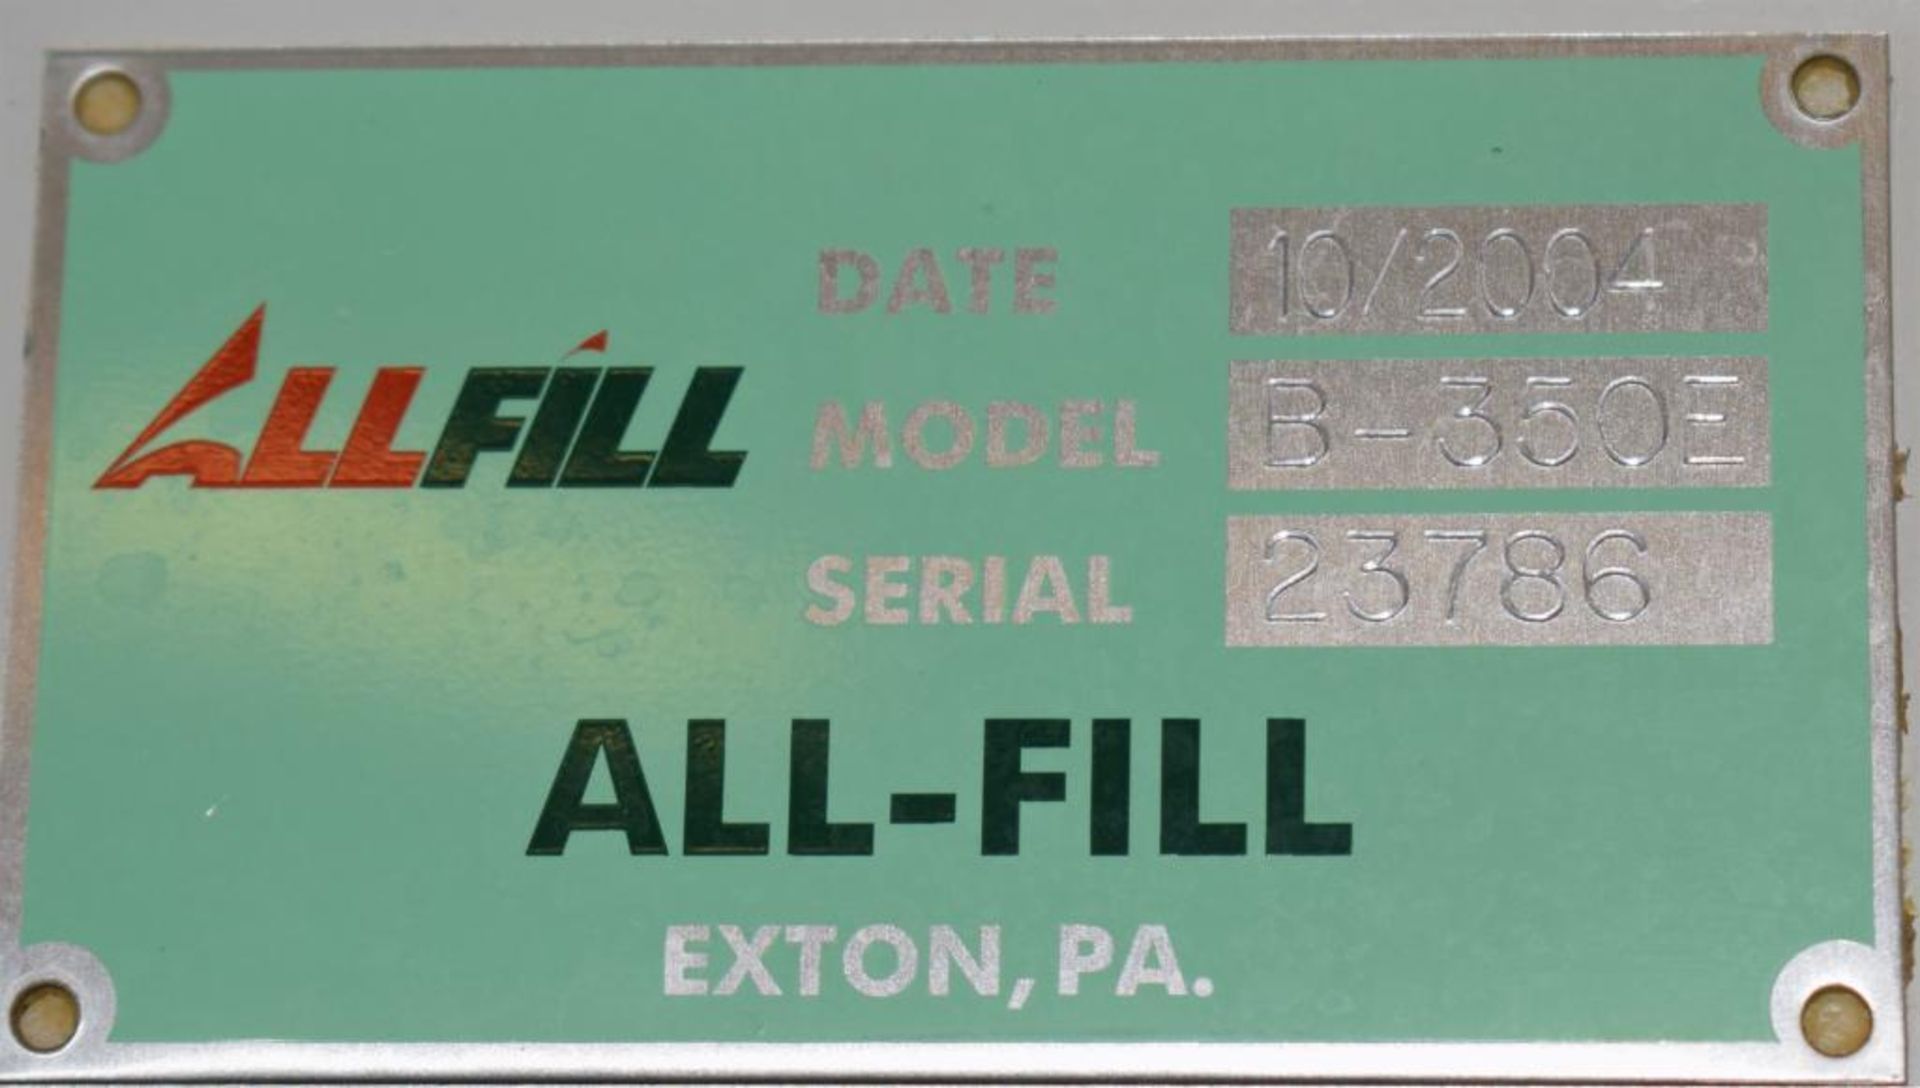 All-FIllinoisl Semi-Automatic FIllinoisler, Model B-350E, Serial# 23786, BuIllinoist 2004. With 304 - Image 19 of 19